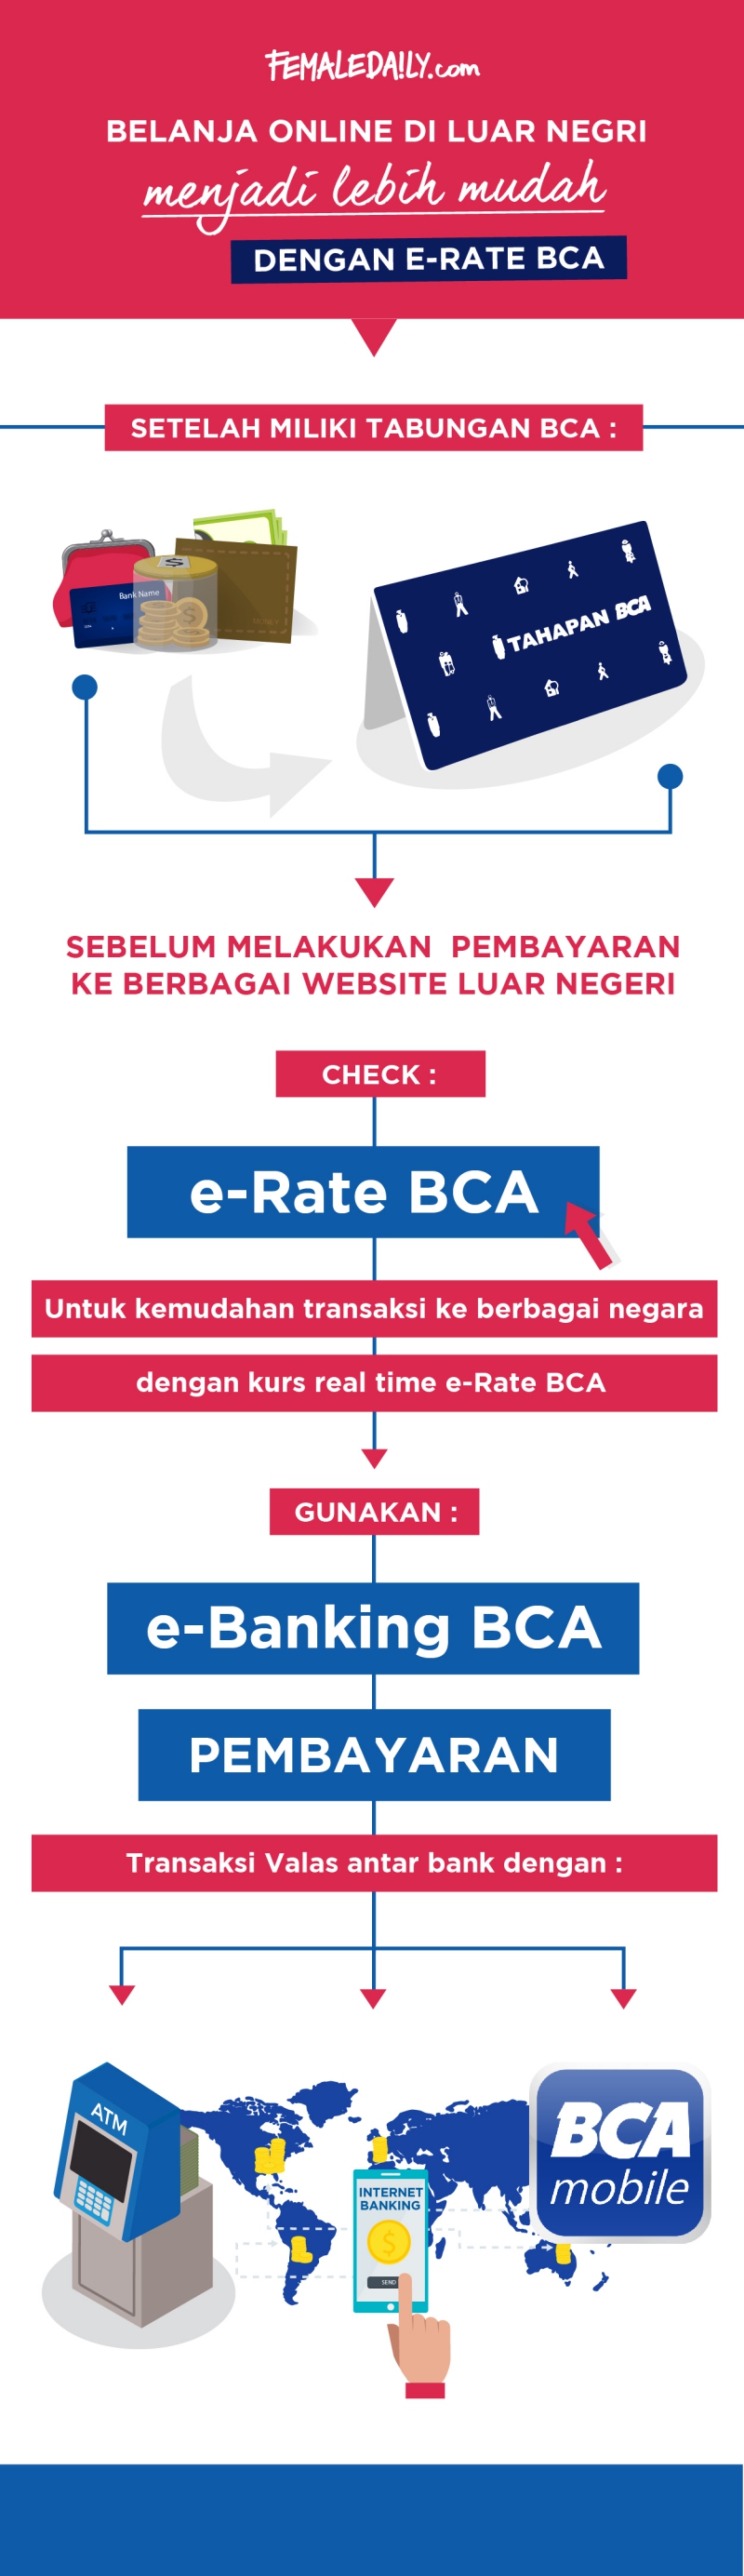 Infographic BCA jpg